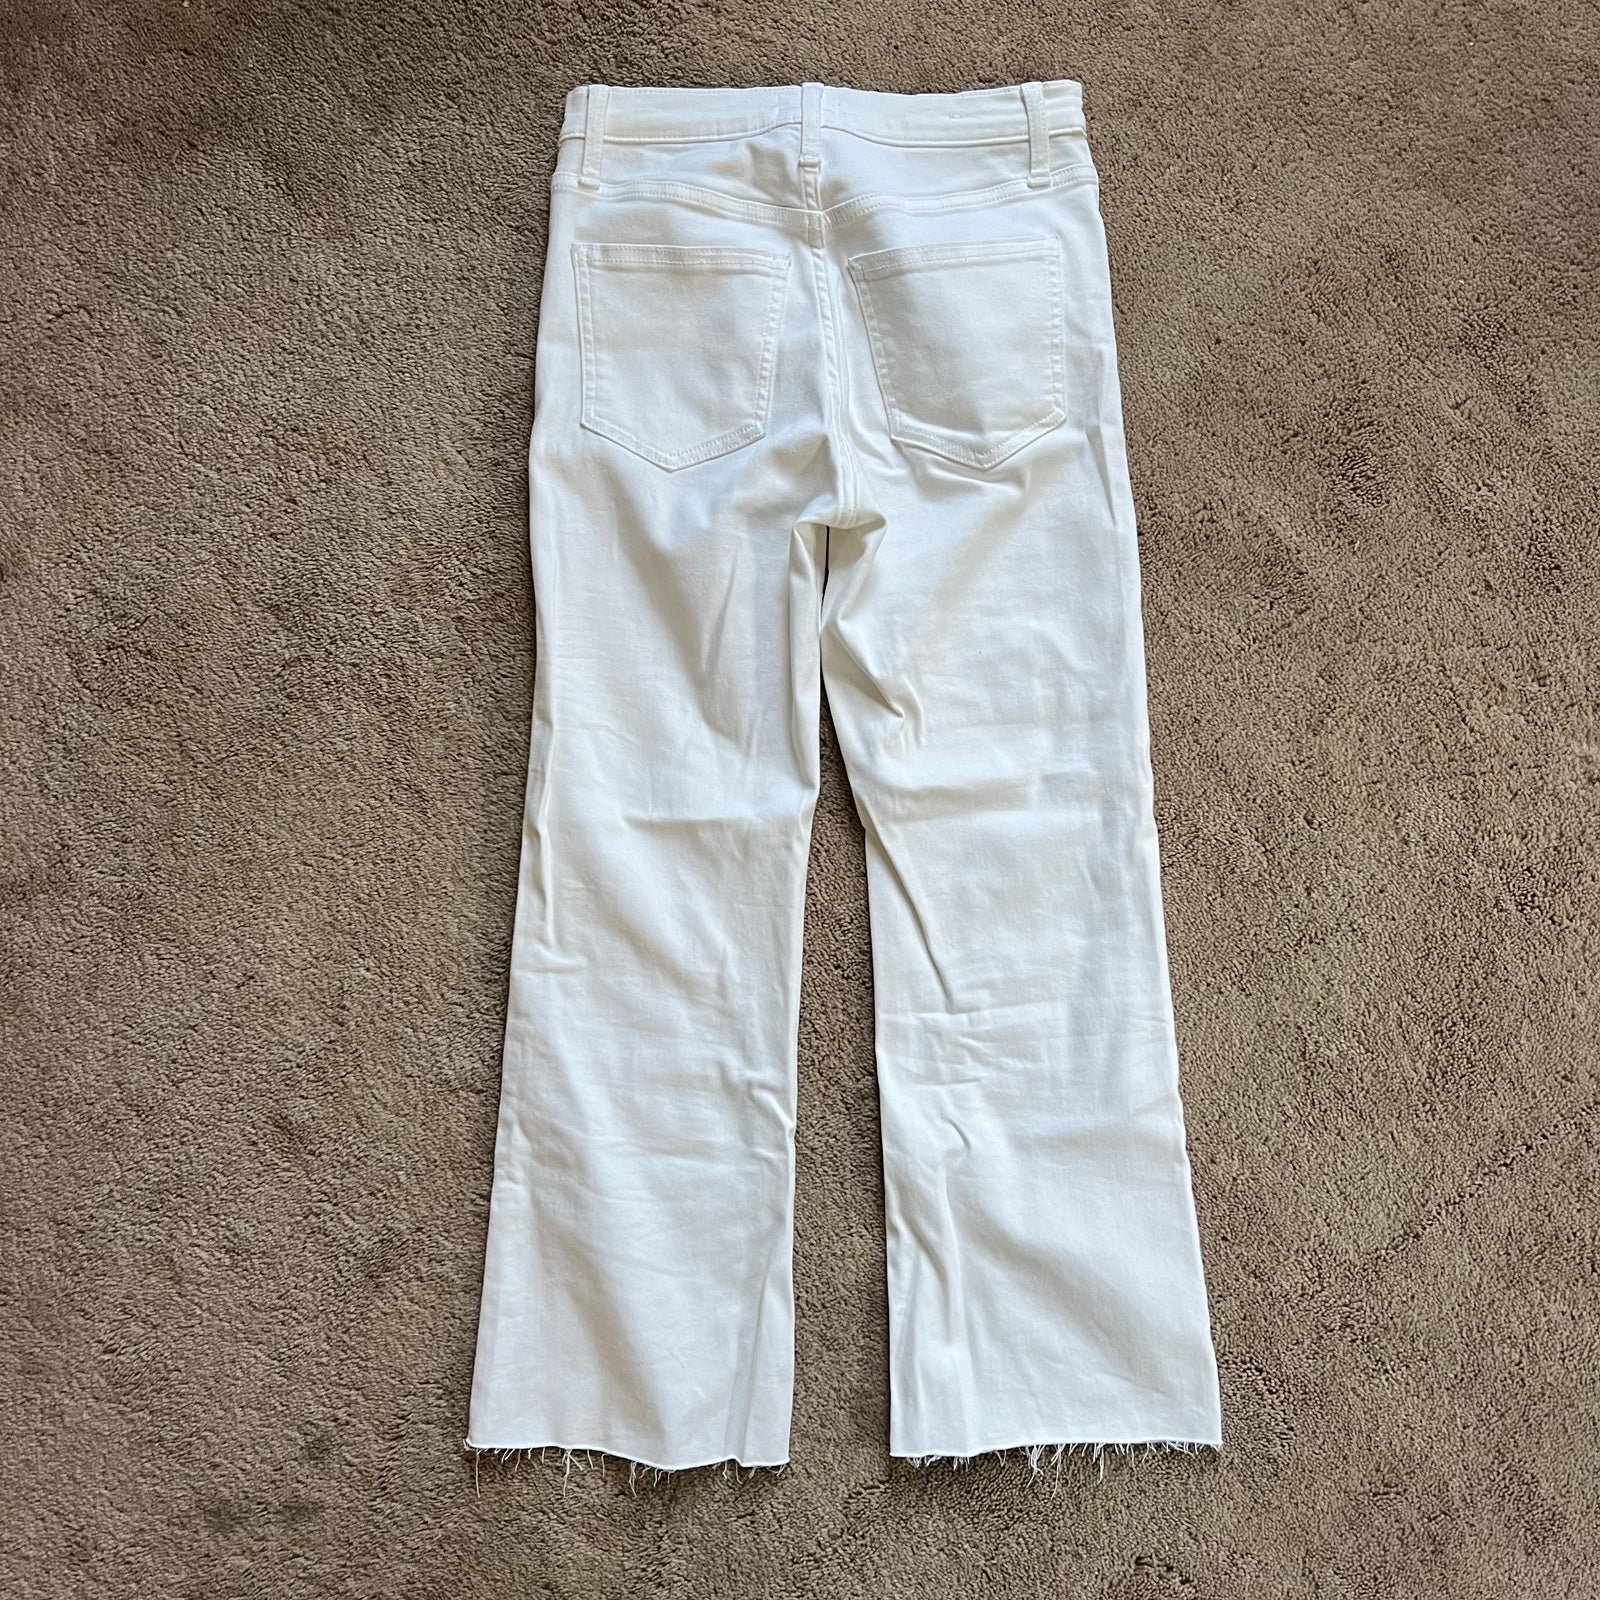 Discounted White Mid Rise Flare Jeans IukpVFQcu High Quaity